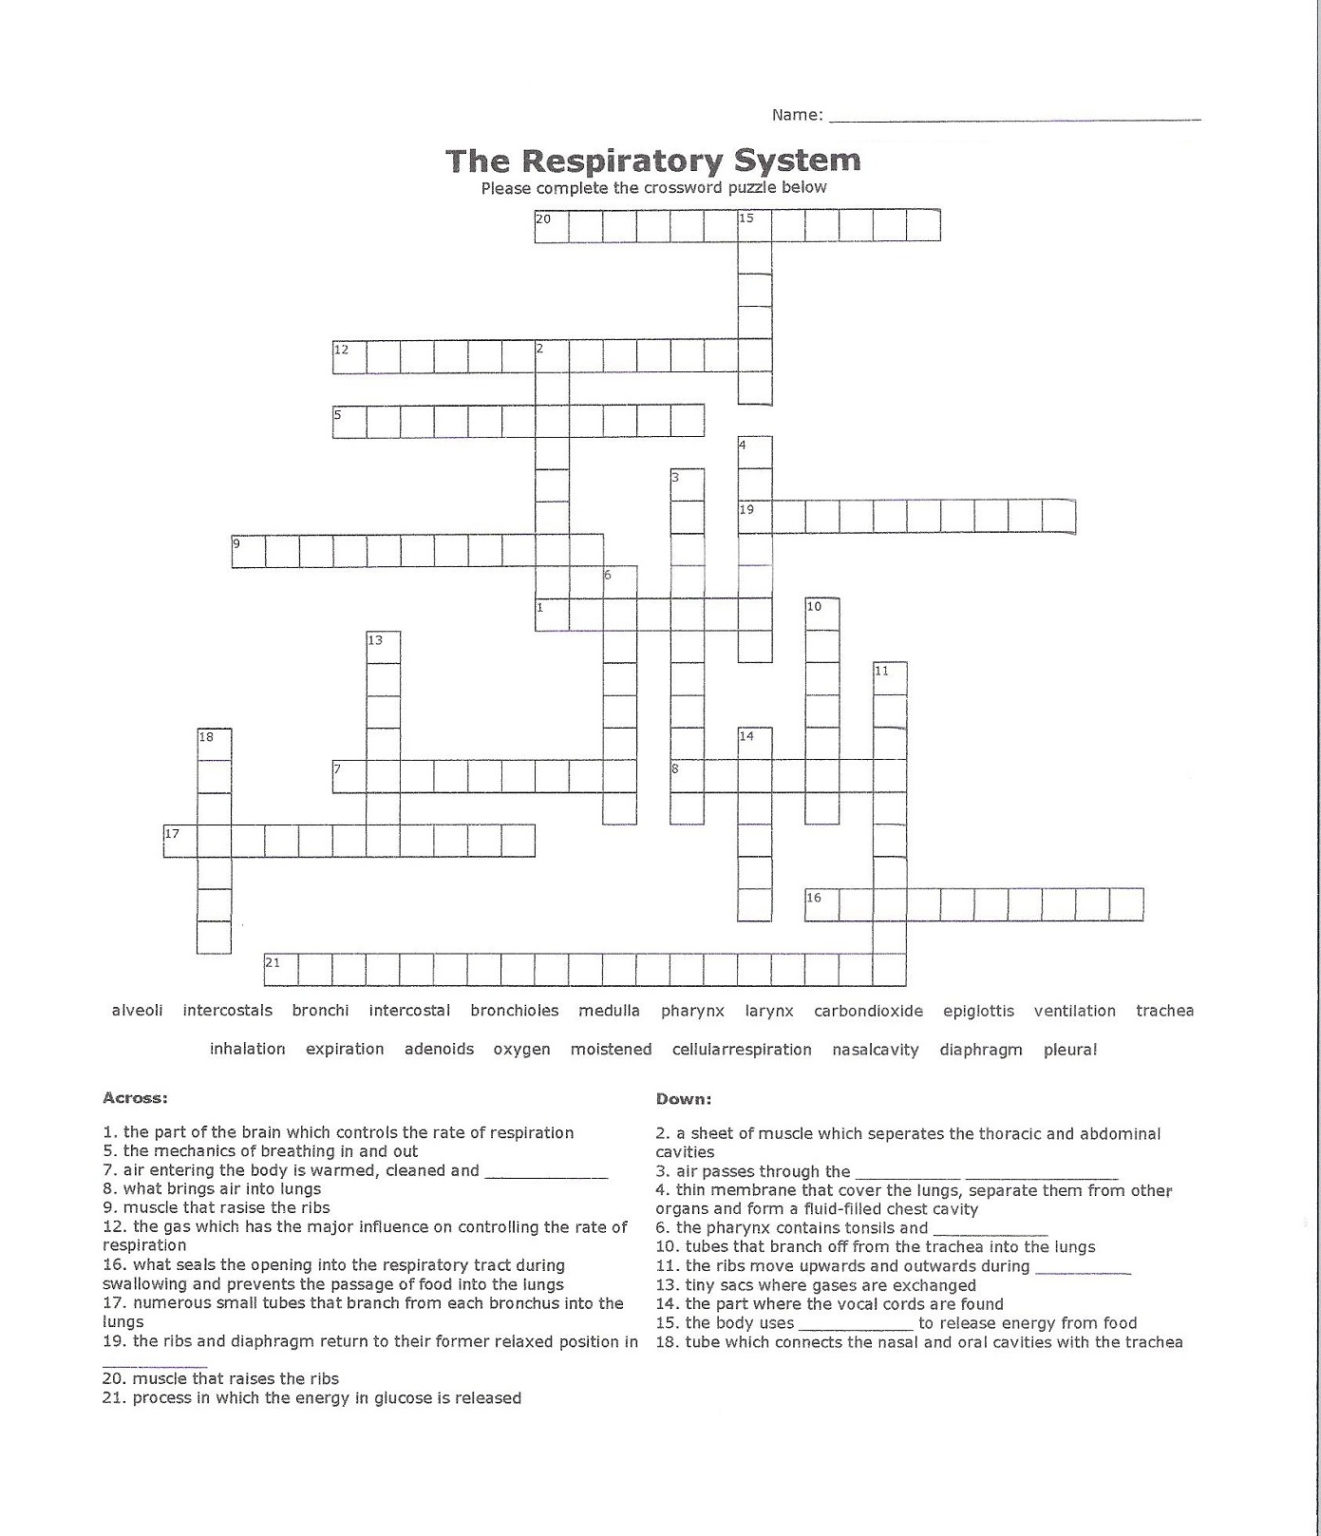 Respiratory System Crossword Puzzle Activity Shelter FreePrintableTM com